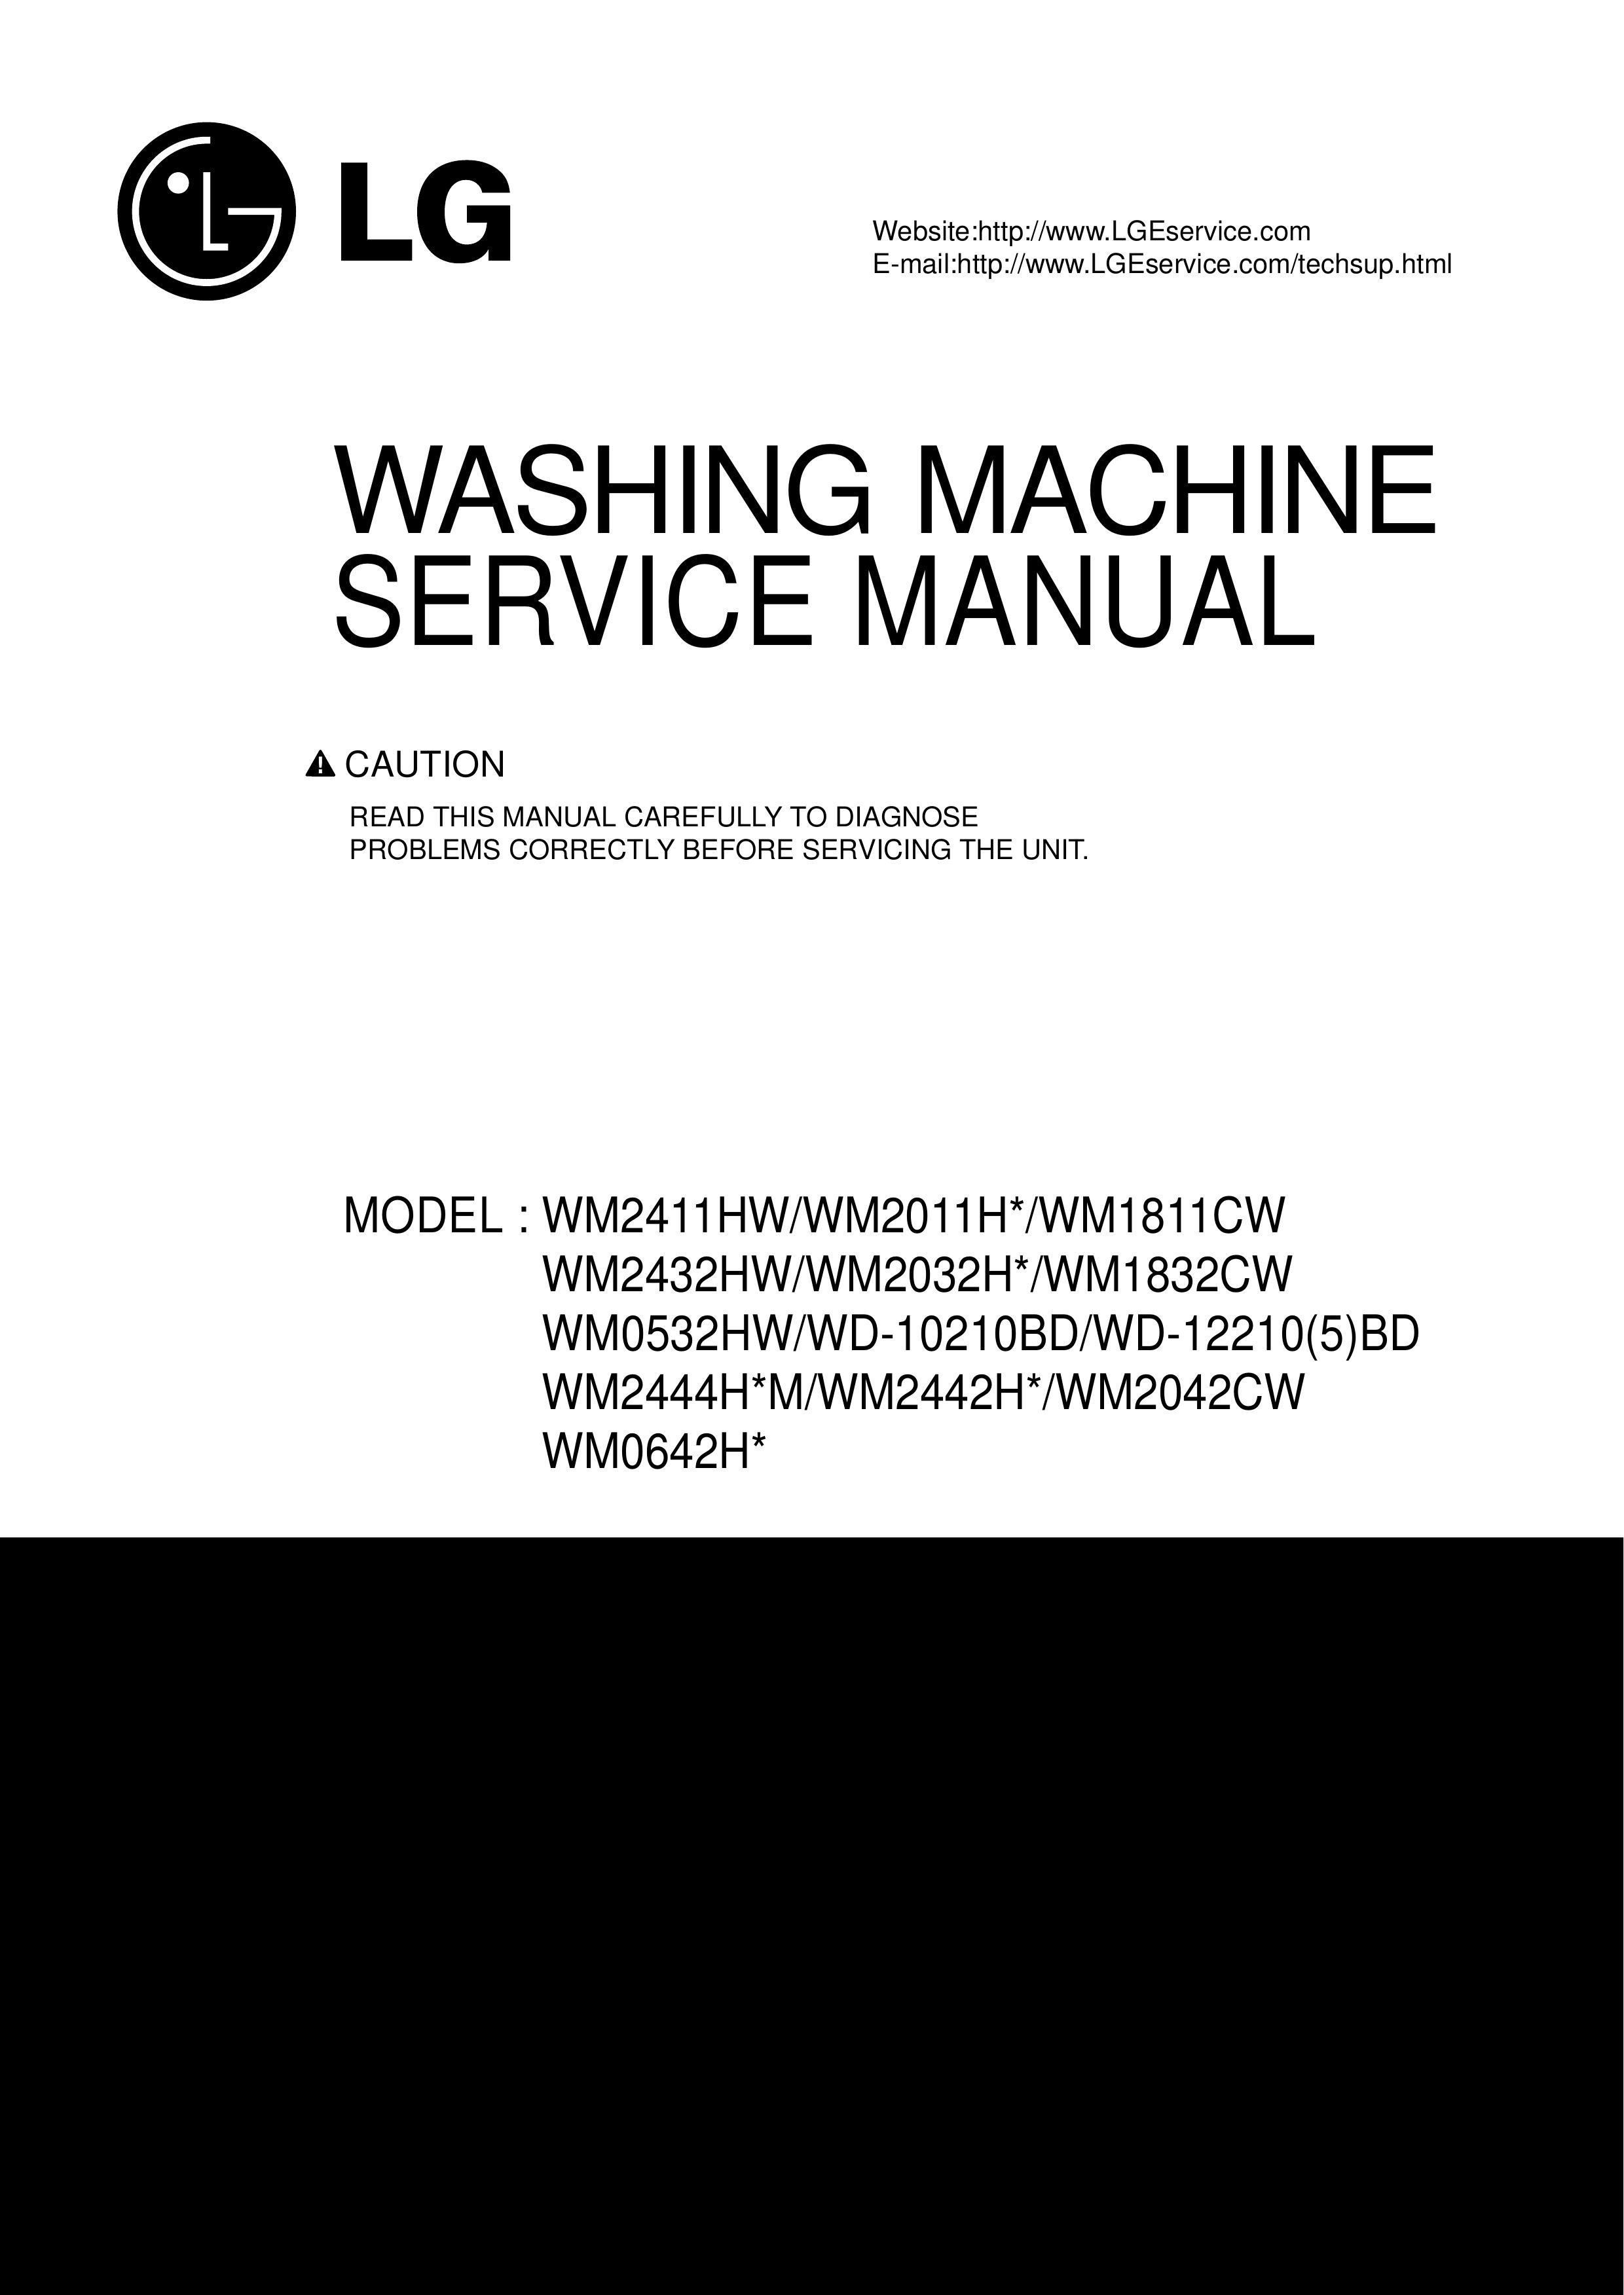 LG Electronics WM2032H* Washer/Dryer User Manual